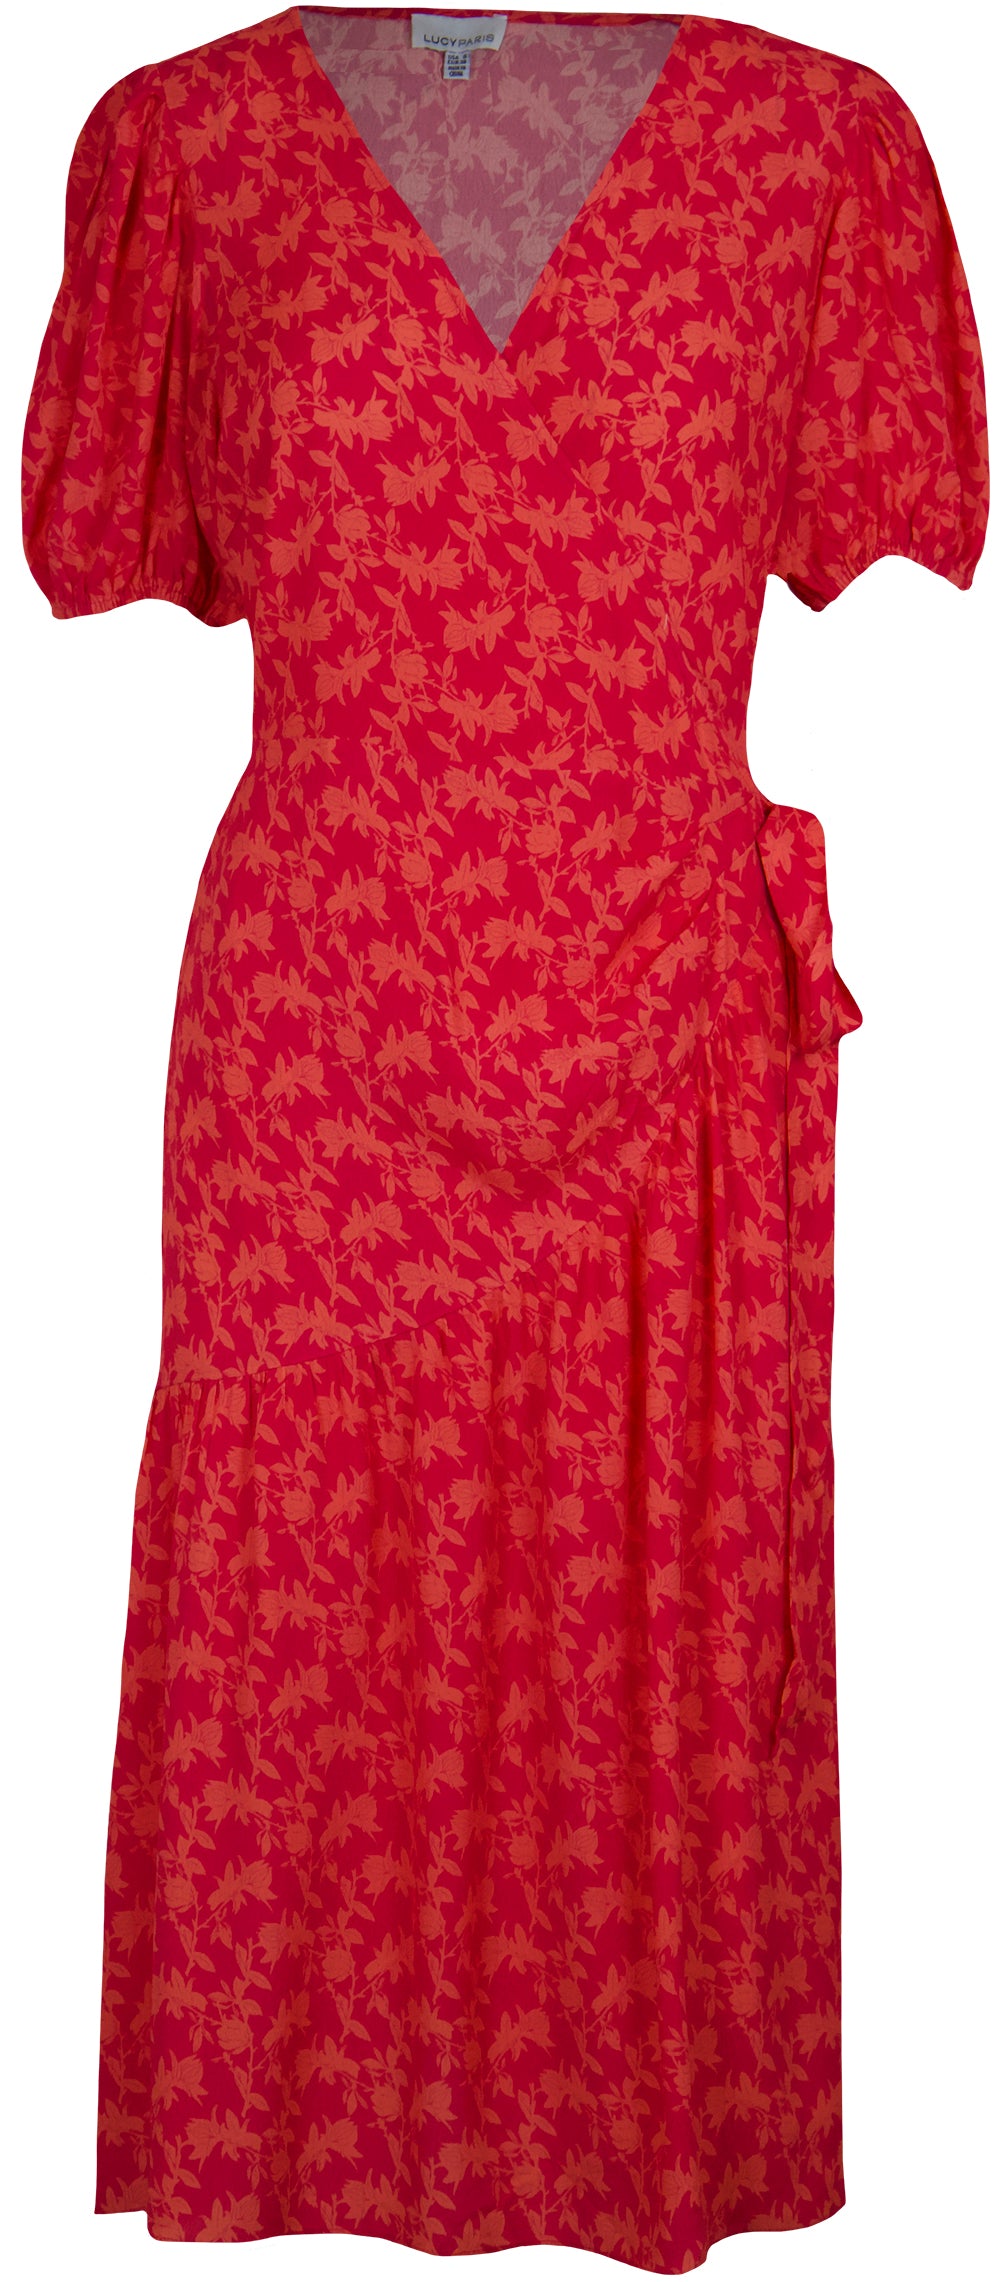 Carnation Wrap Dress